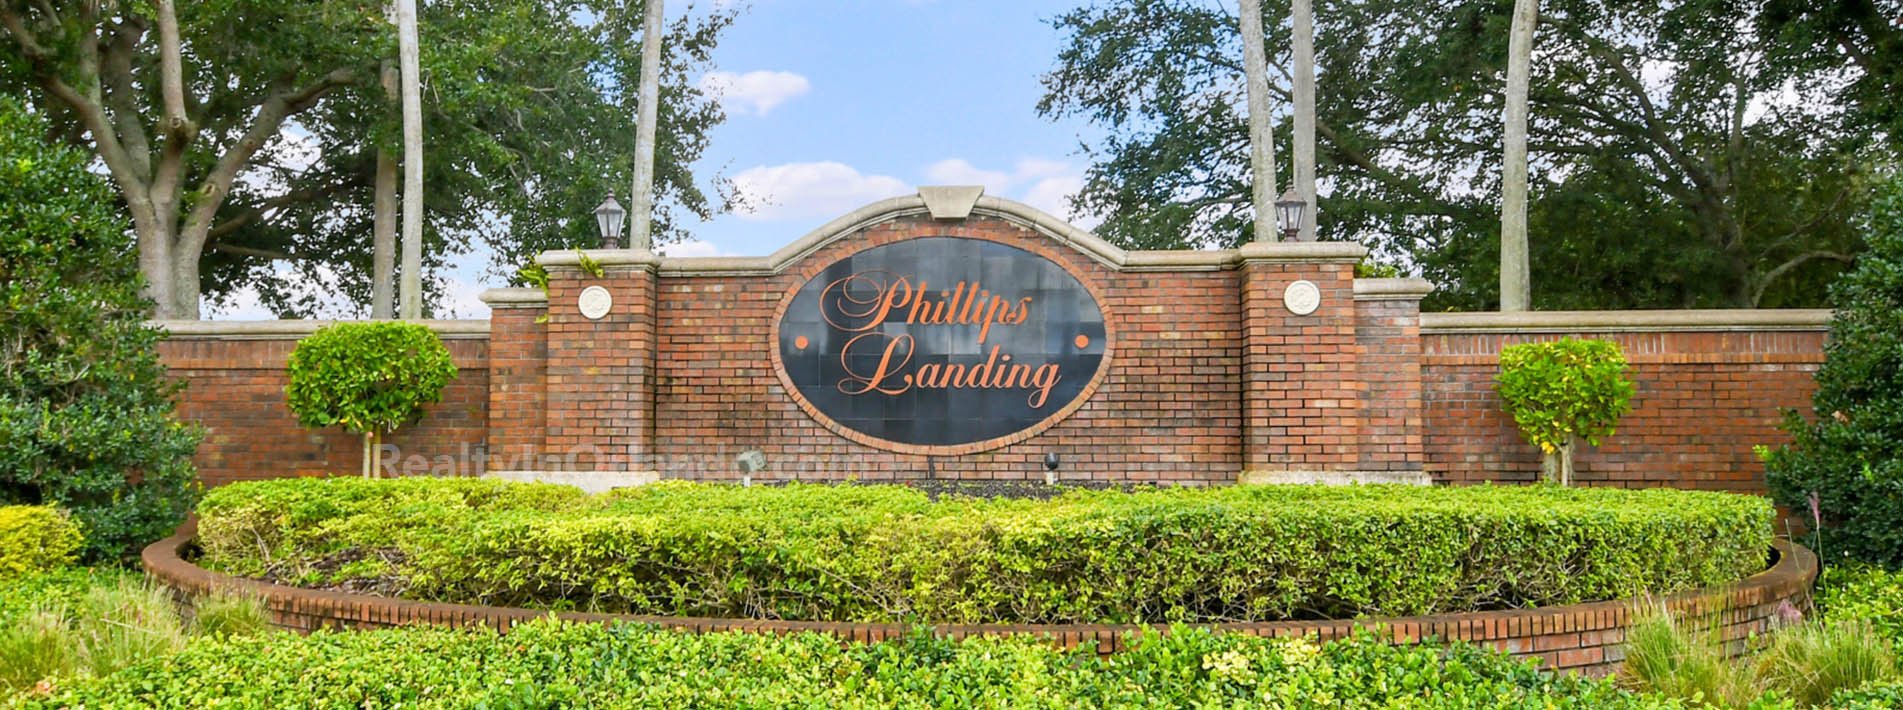 Phillips Landing Orlando